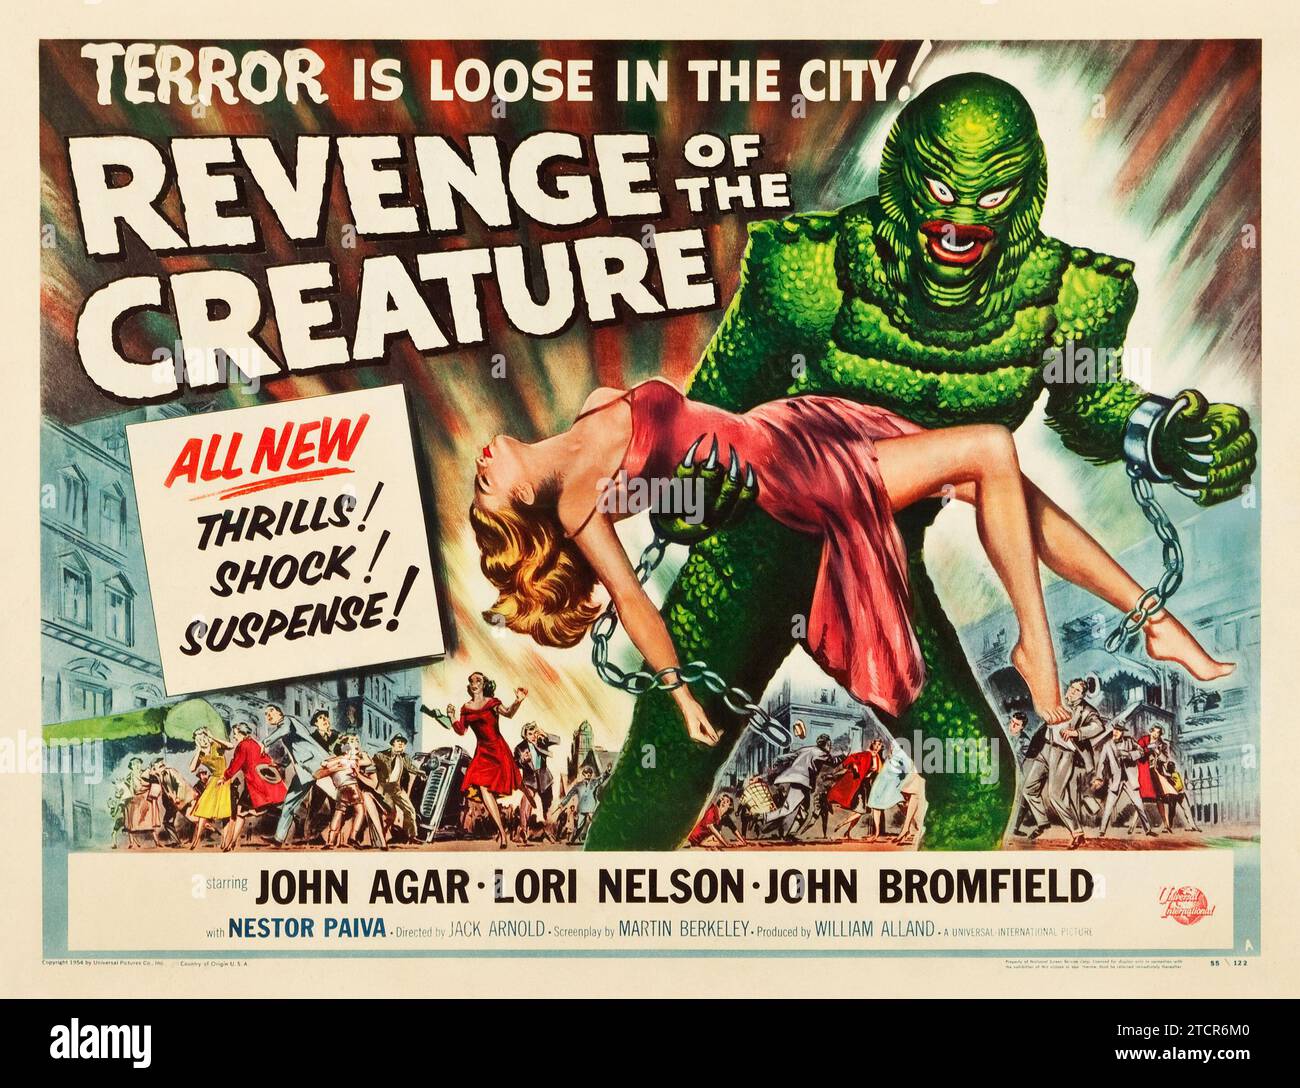 Vintage movie poster - Revenge of the Creature (Universal International, 1955). Half Sheet, style A - John Agar, Lori Nelson, John bromfields - 1950s vintage film poster - horror - sci-fi - monster Stock Photo